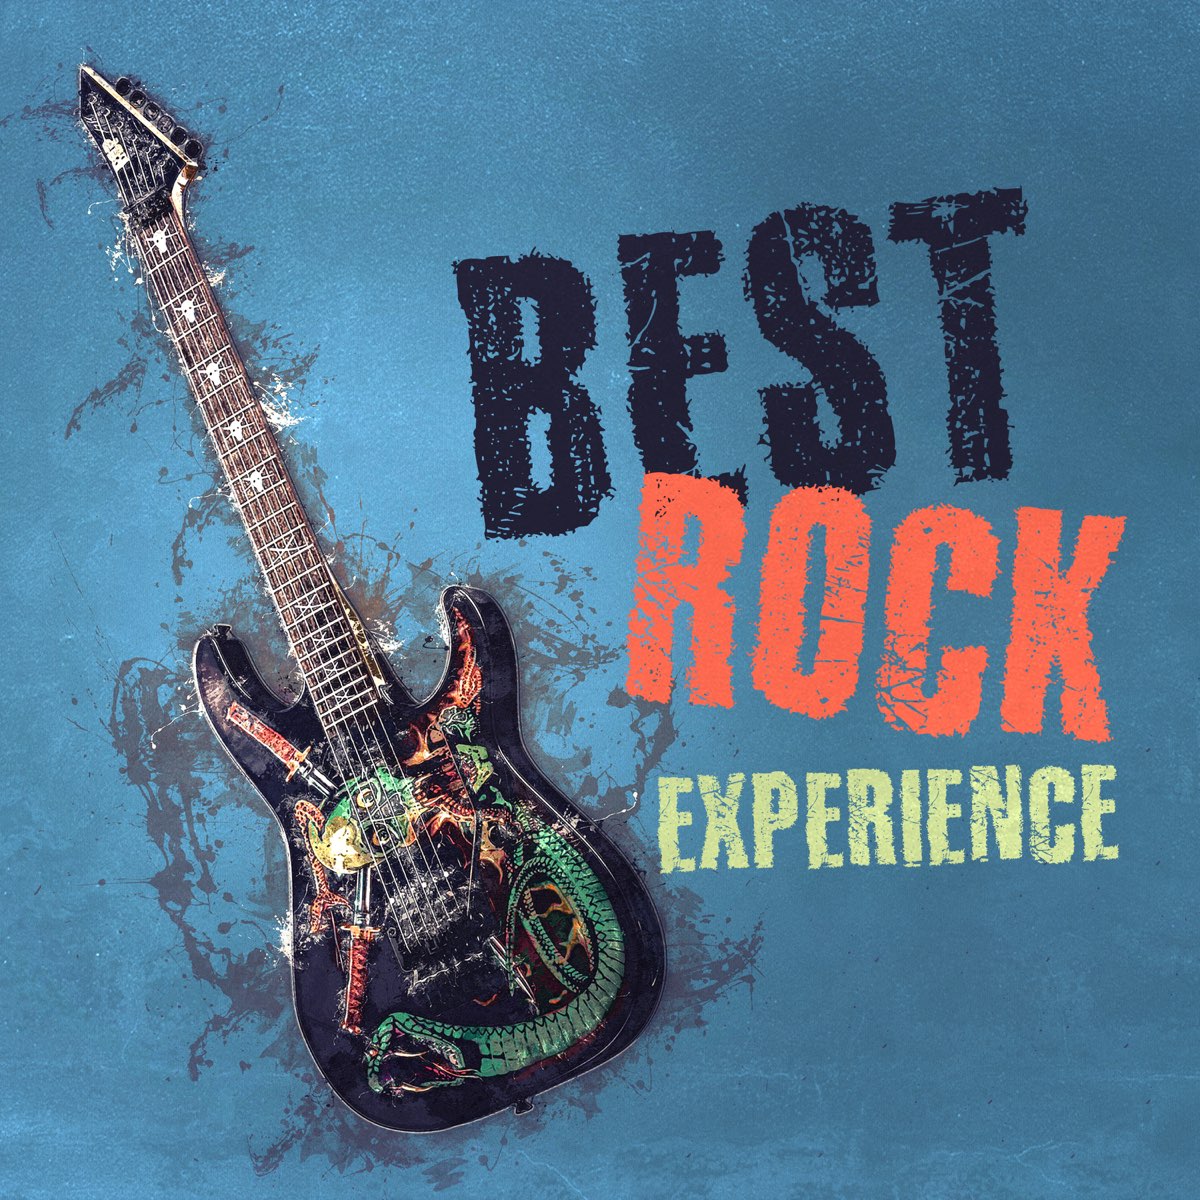 Альтернативный рок лучшее. Best Rock. Блюз-рок рифф. Better рок. Фото the best Rock.